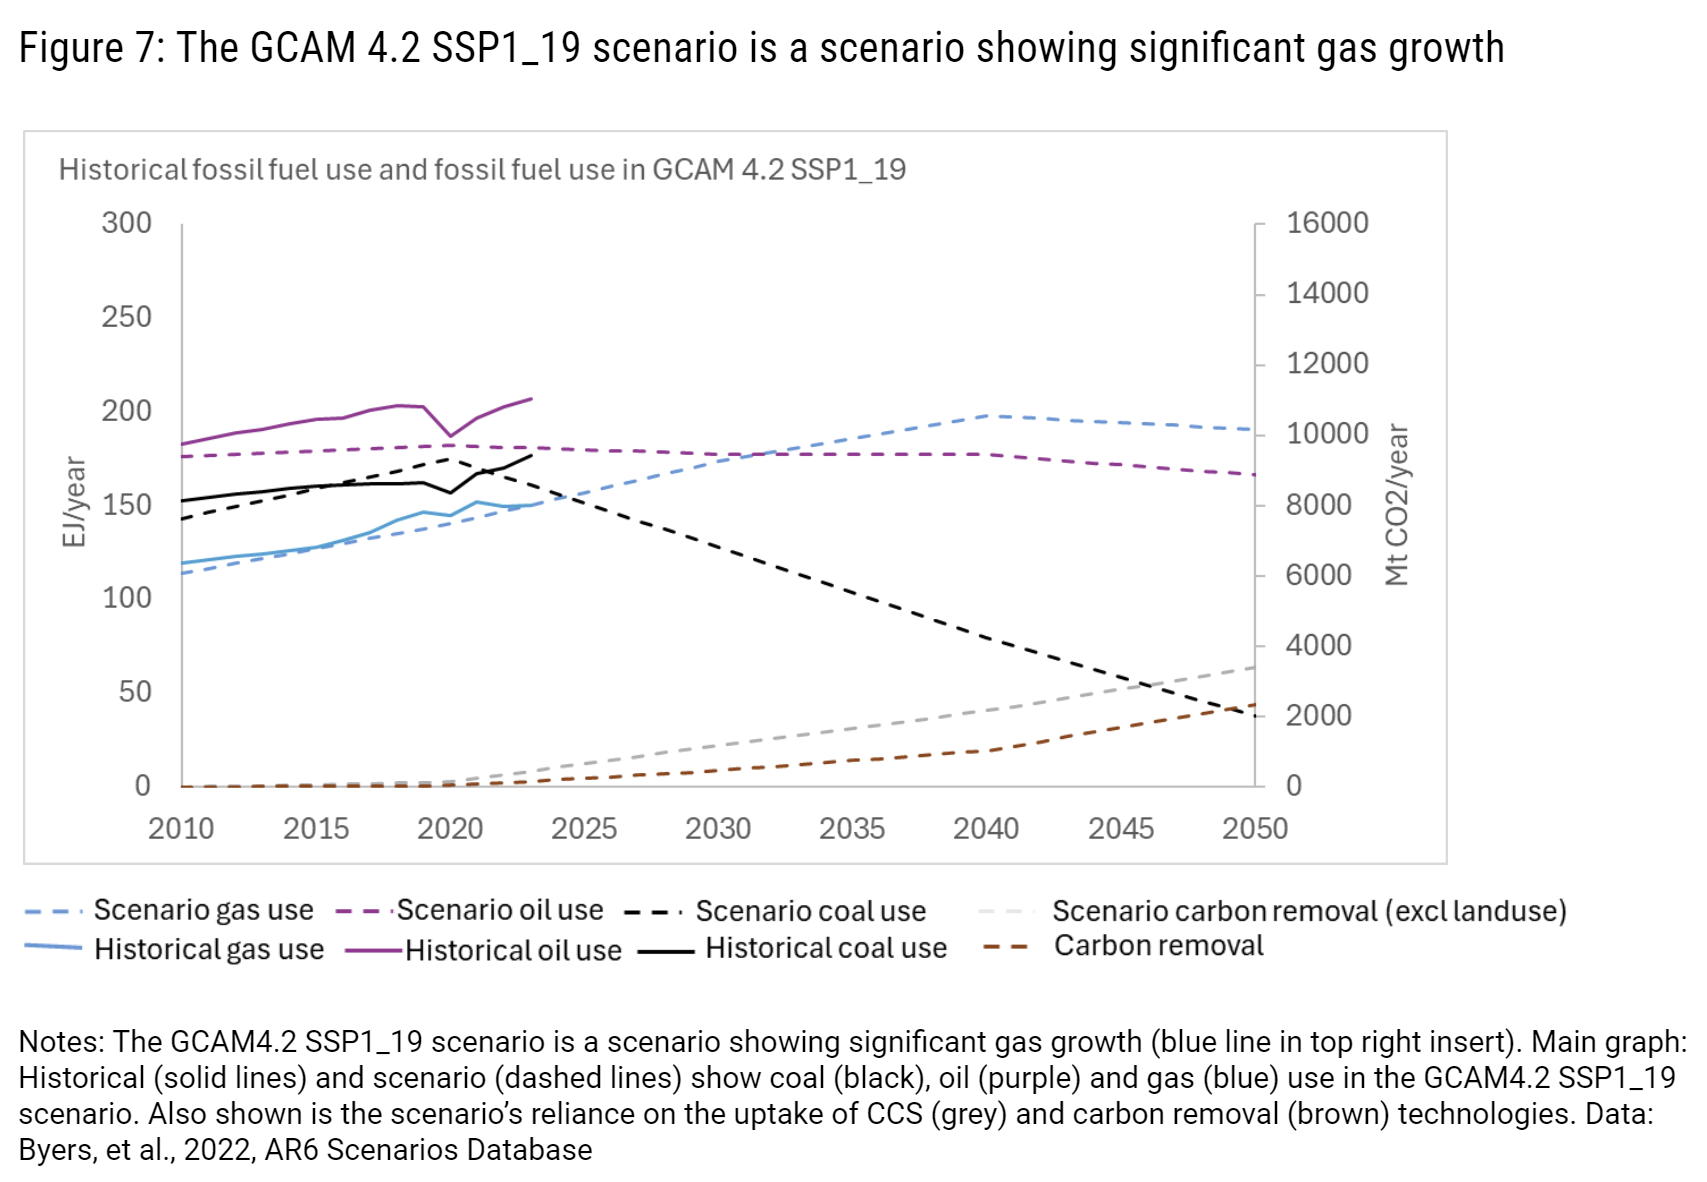 The GCAM 4.2 SSP1_19 scenario is a scenario showing significant gas growth